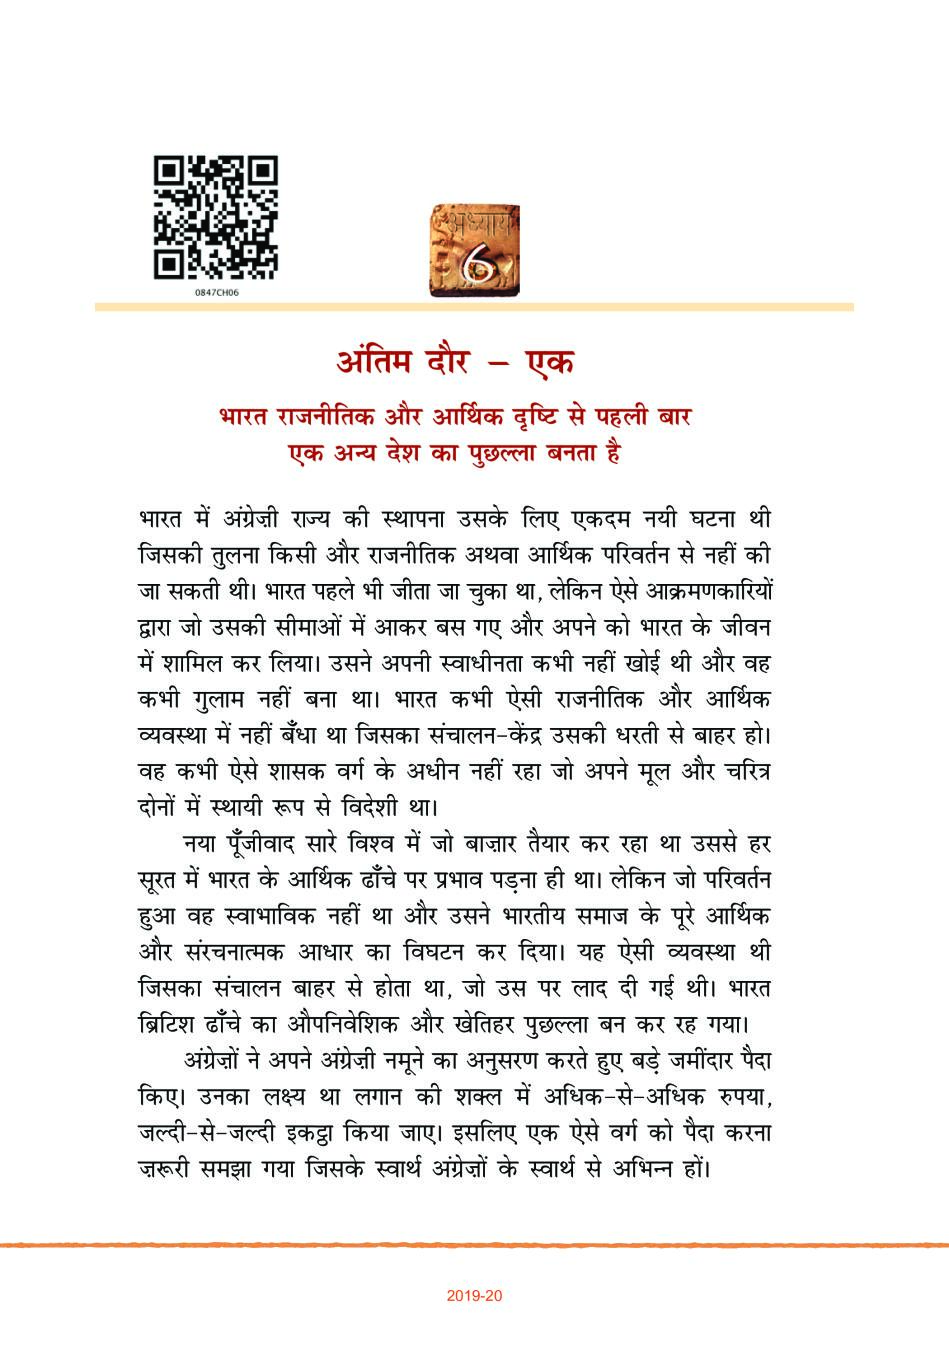 NCERT Book Class 8 Hindi (भारत की खोज) Chapter 6 अंतिम दौर – एक - Page 1